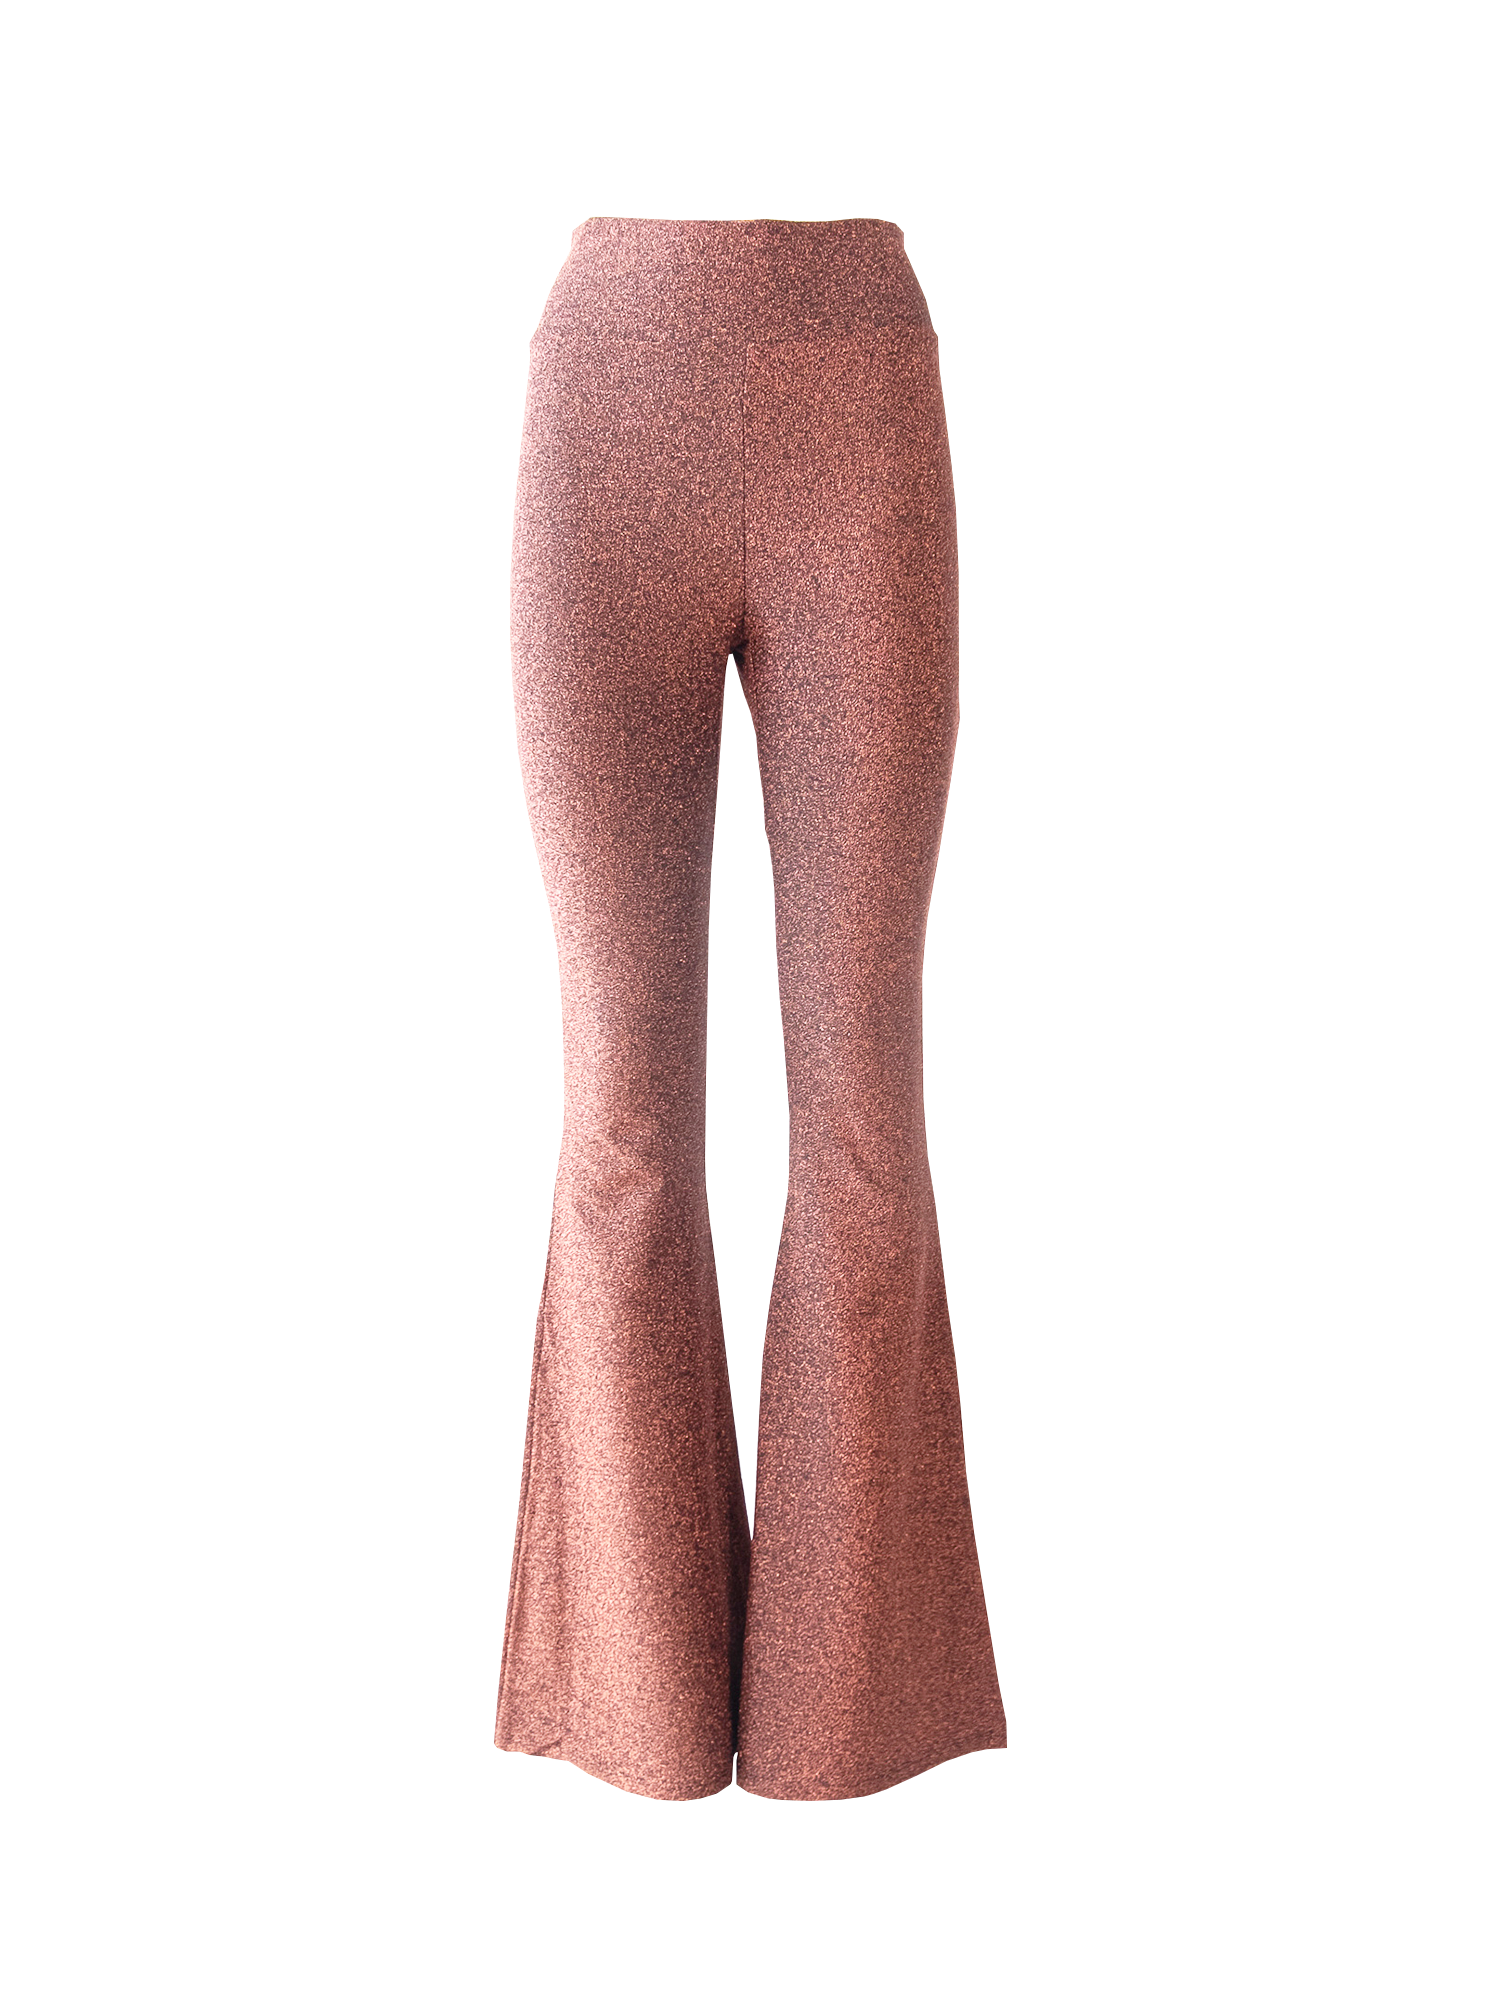 LOLA - flared pants in bronze lurex